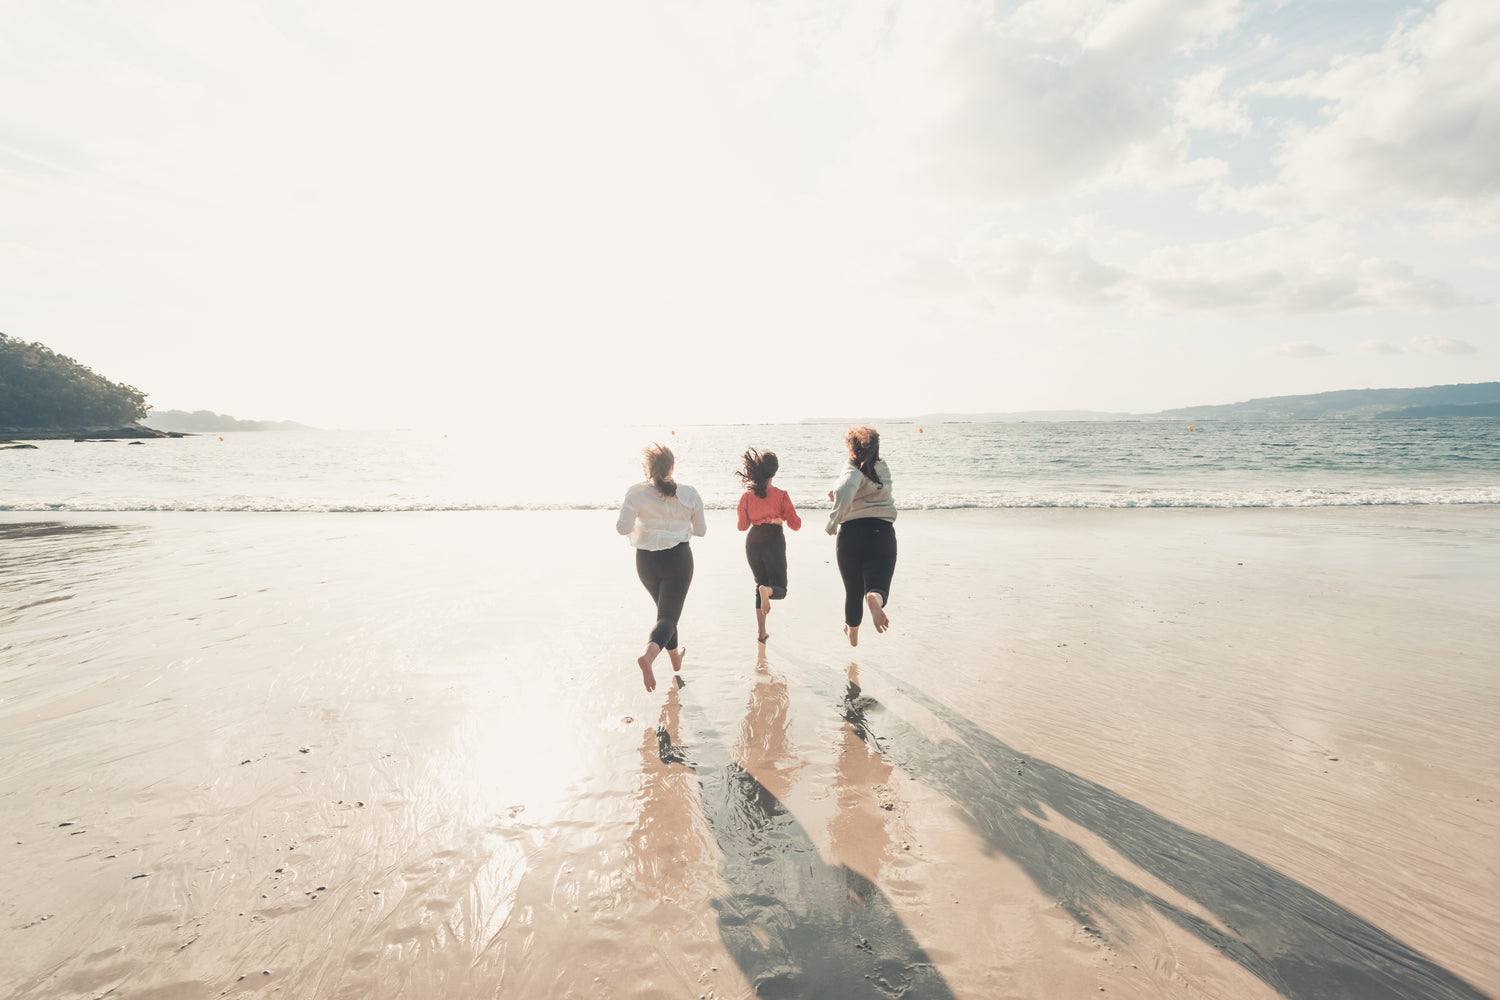 Three women running barefoot on a beach towards the ocean